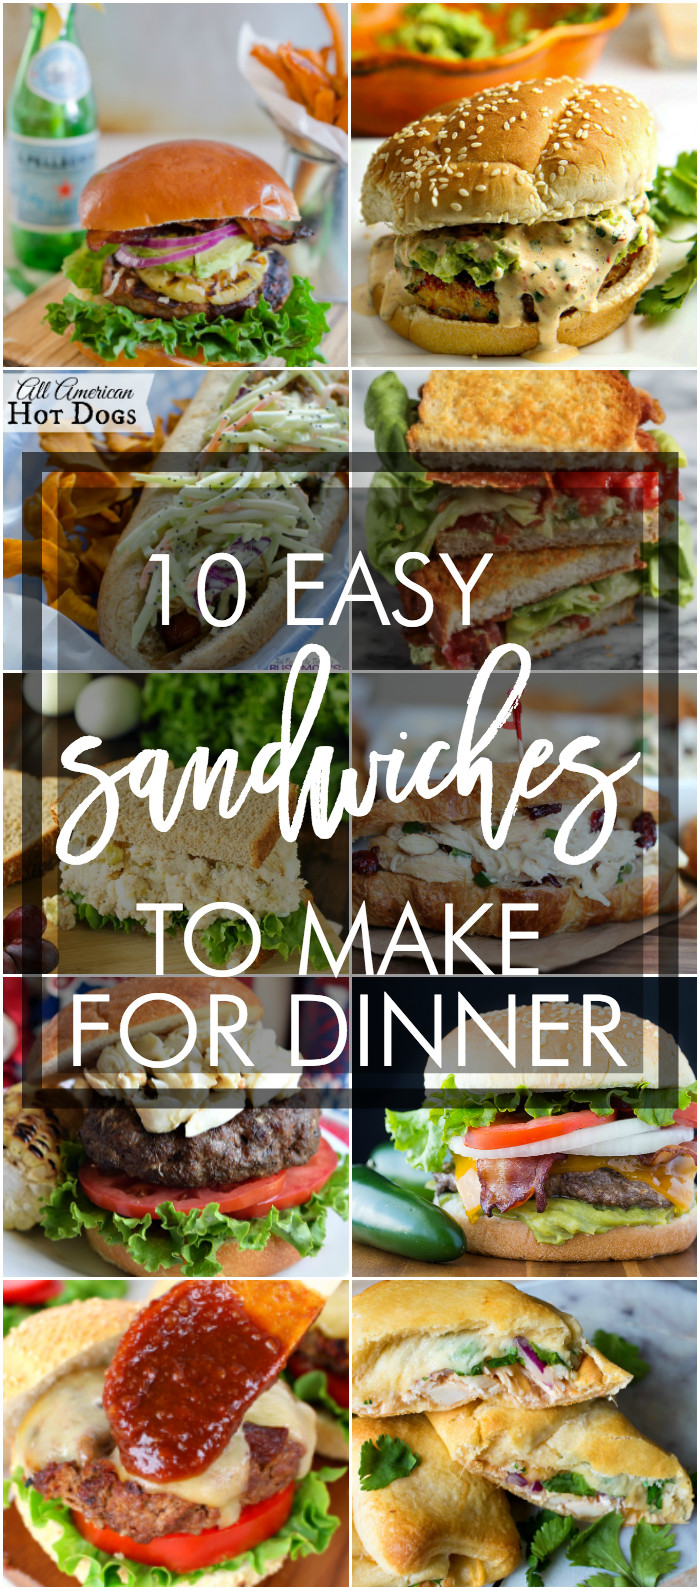 Sandwich Recipes For Dinner
 10 Easy Sandwich Recipes to Make for Dinner